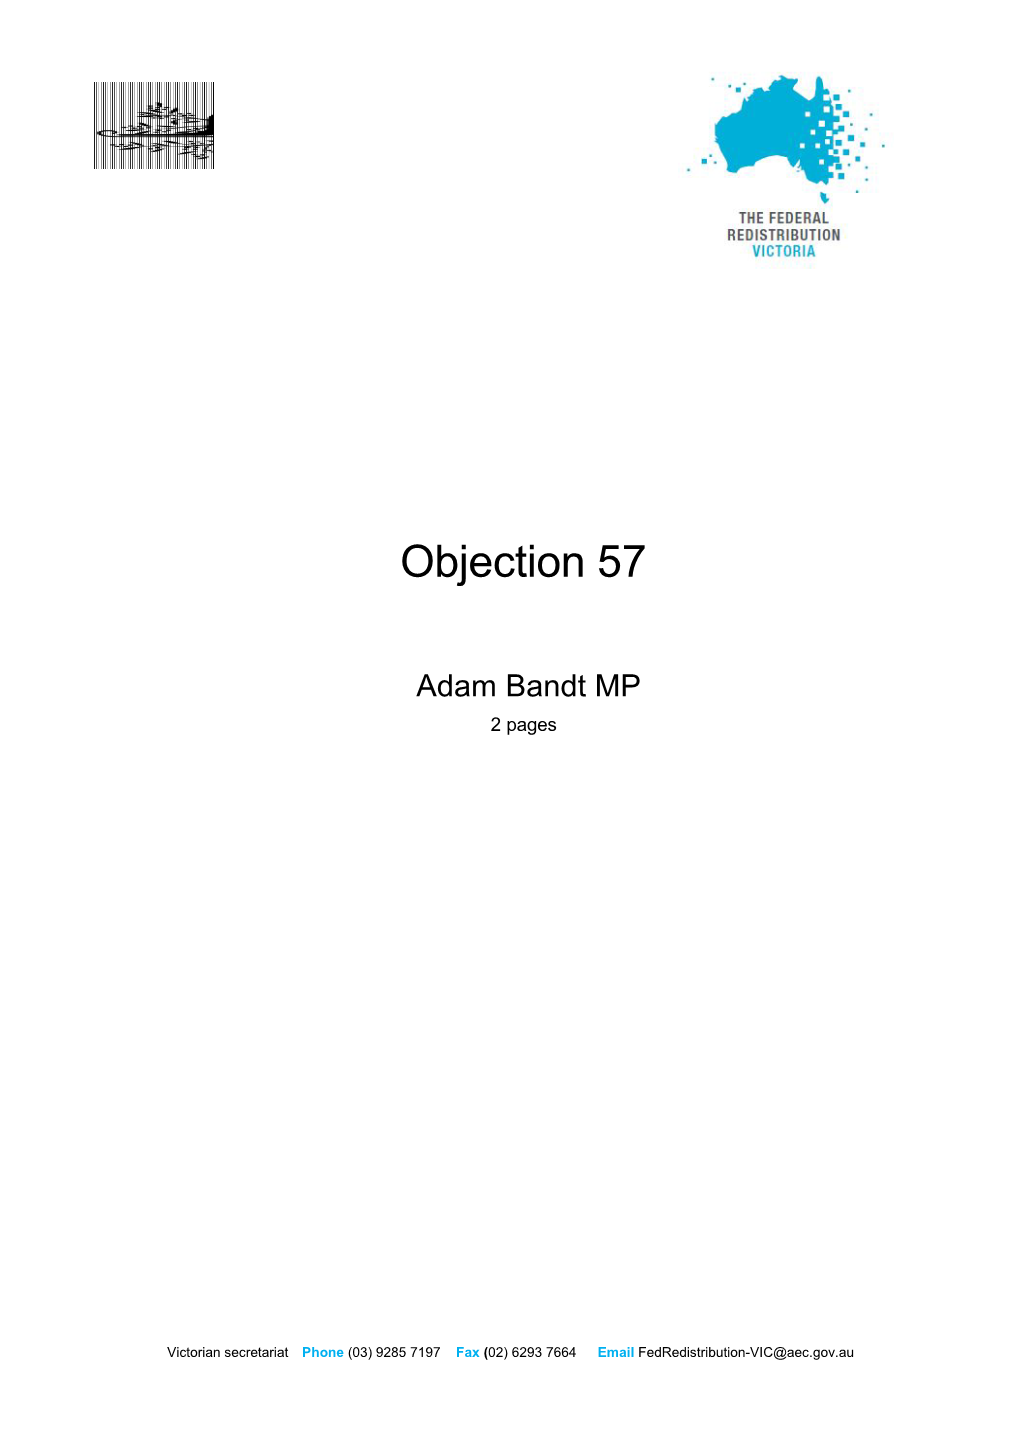 Adam Bandt MP 2 Pages